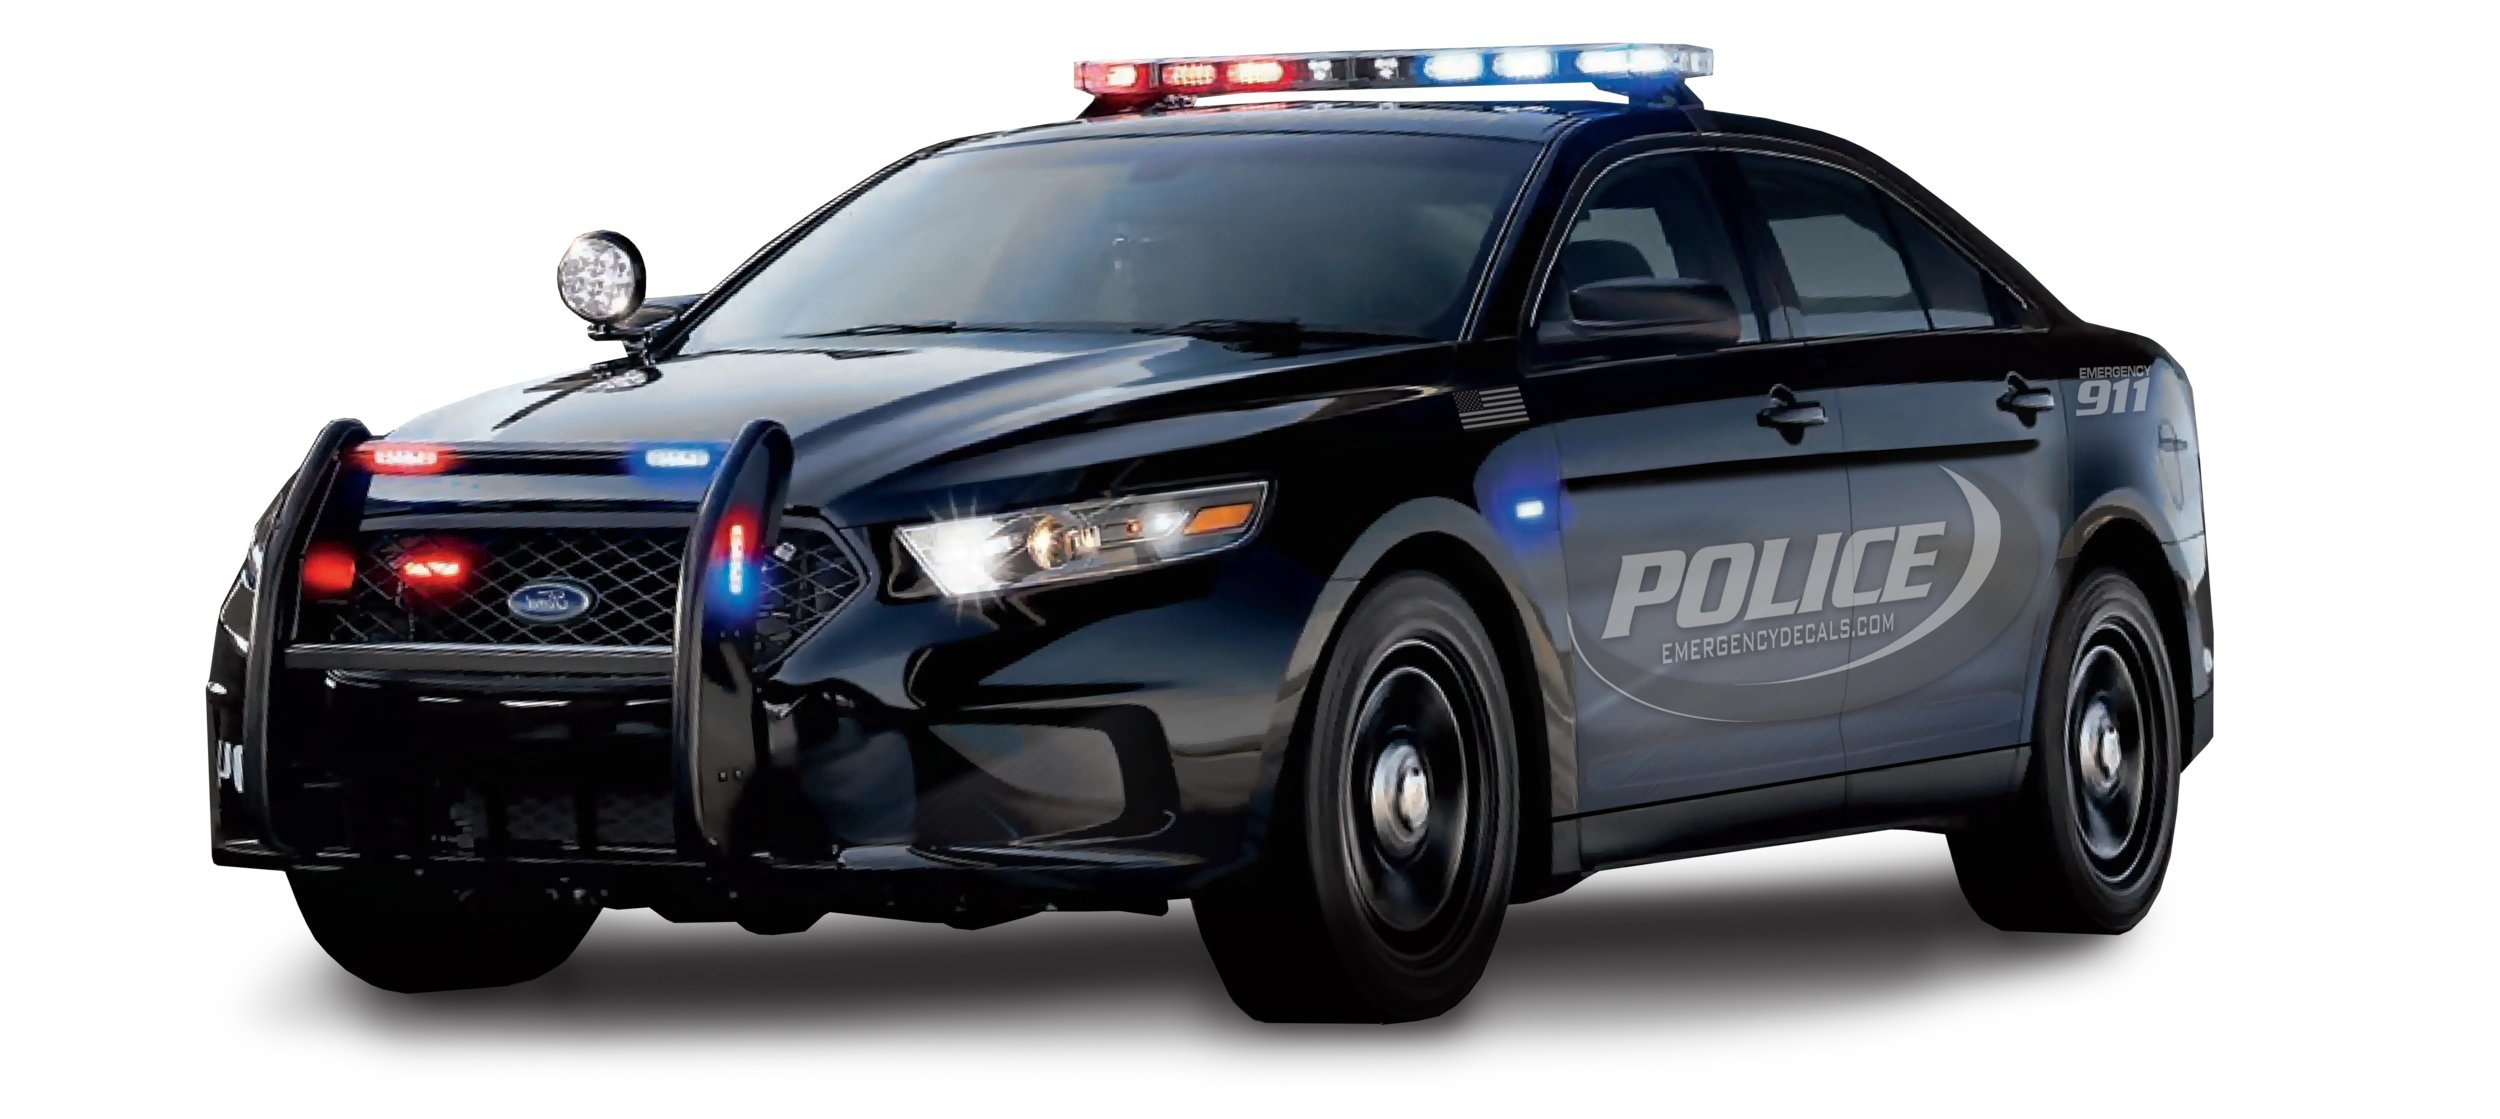 2019 Ford Police Interceptor Sedan